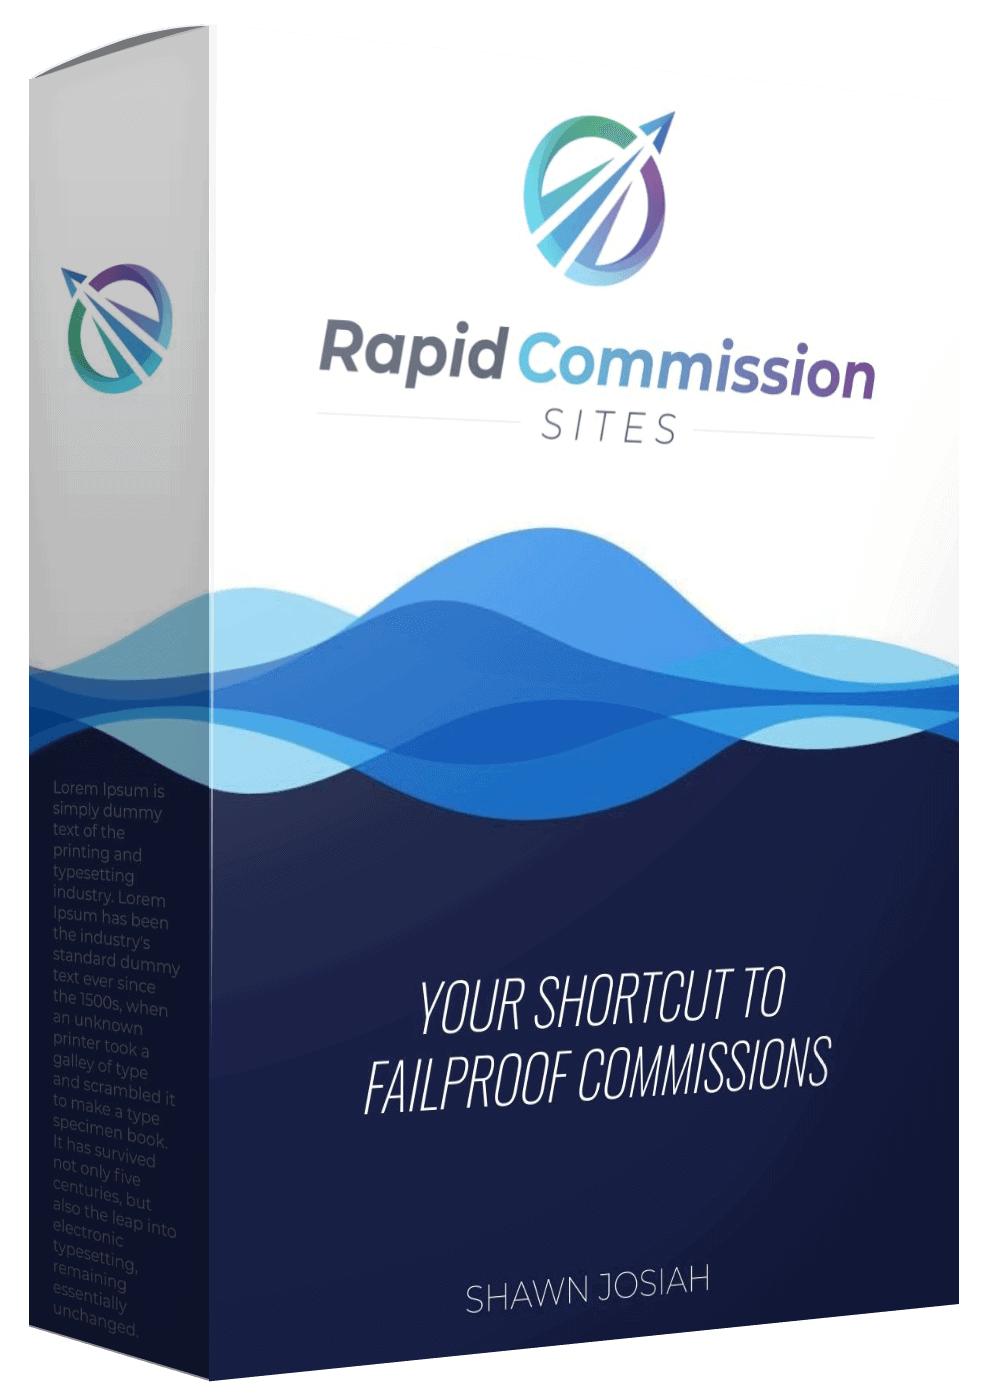 Rapid Commission Sites Review